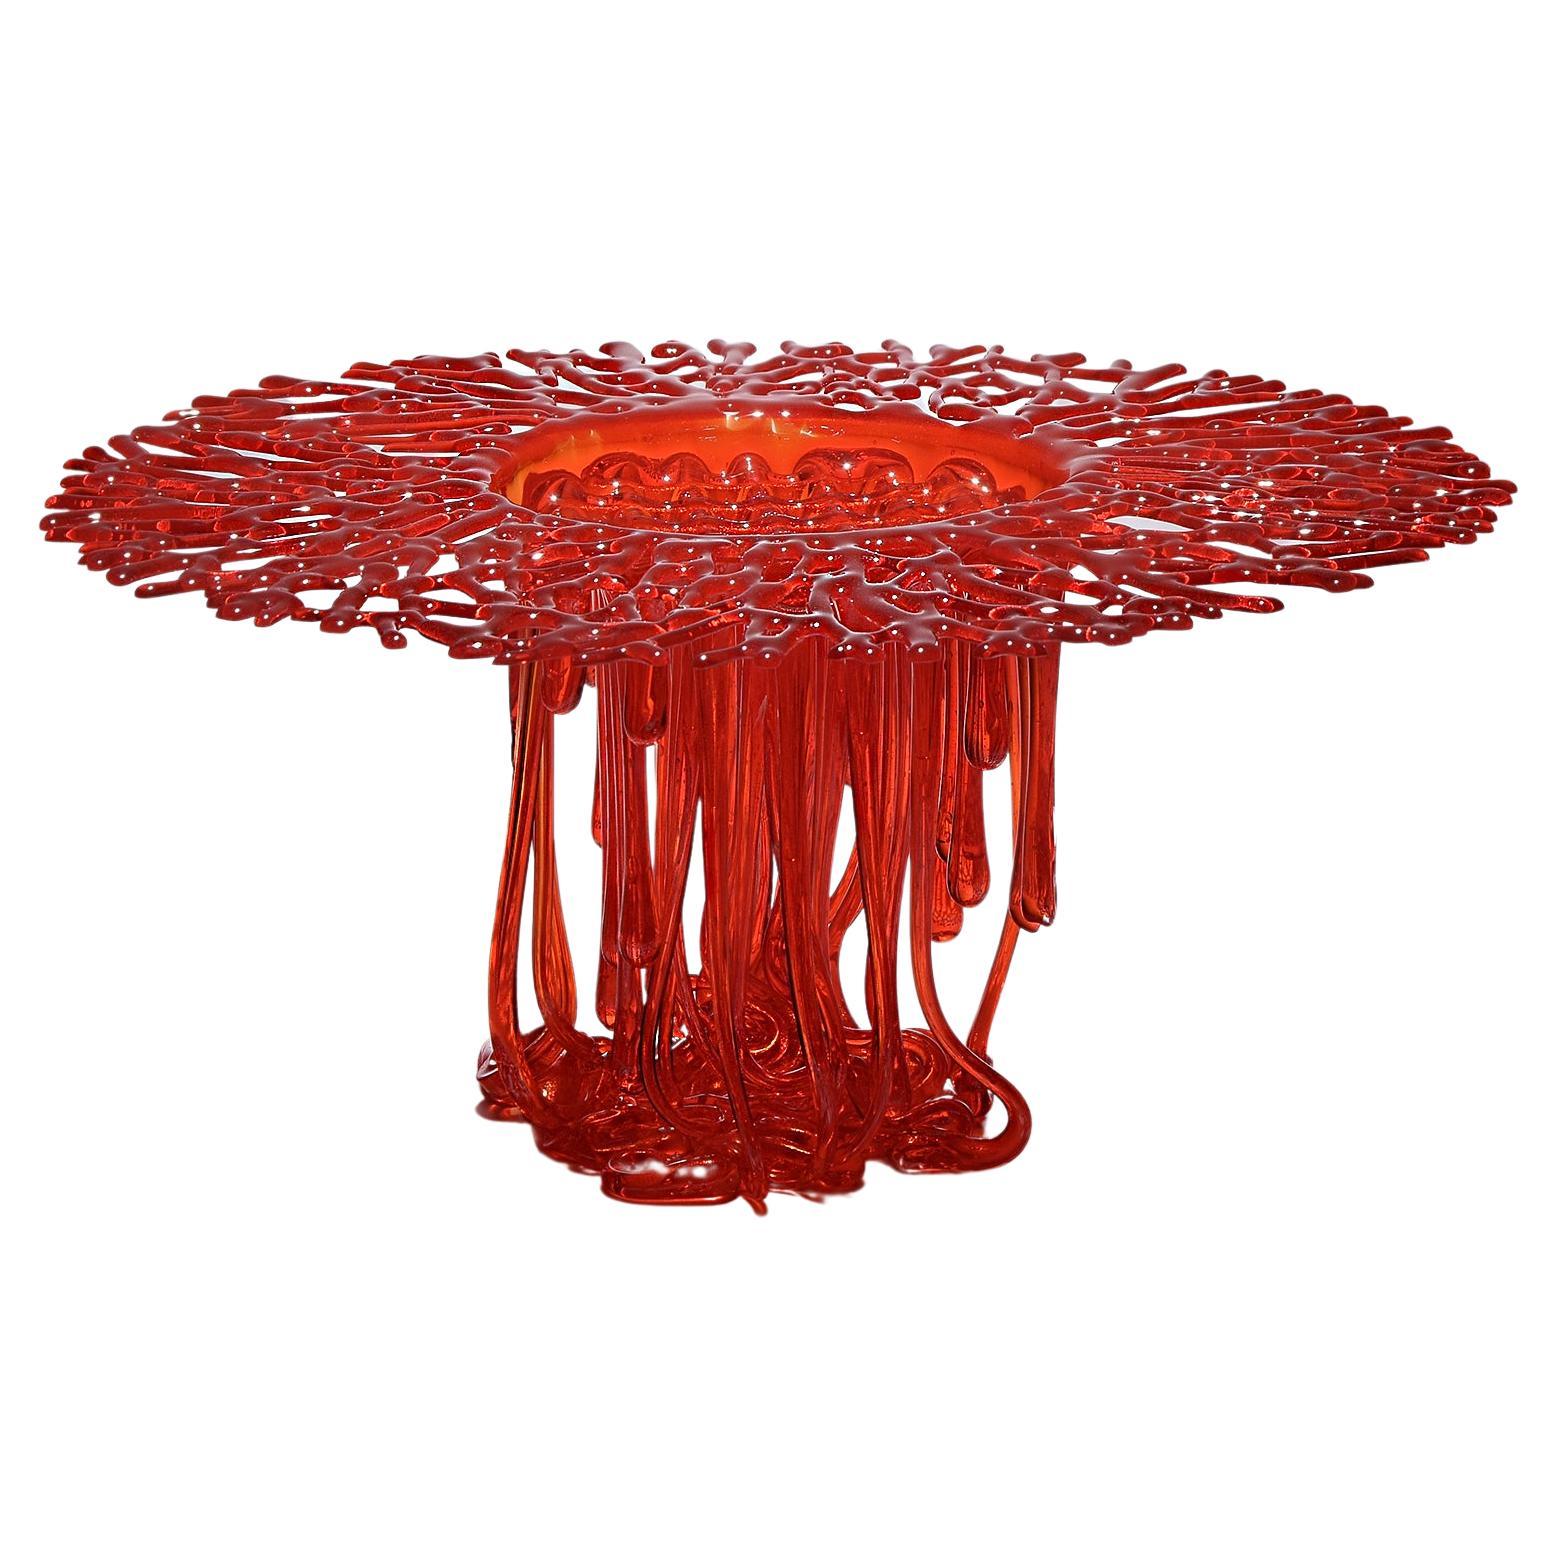 "Red Passion", Murano Glass Centerpiece, Handmade in Italy, Unique Design, 2022